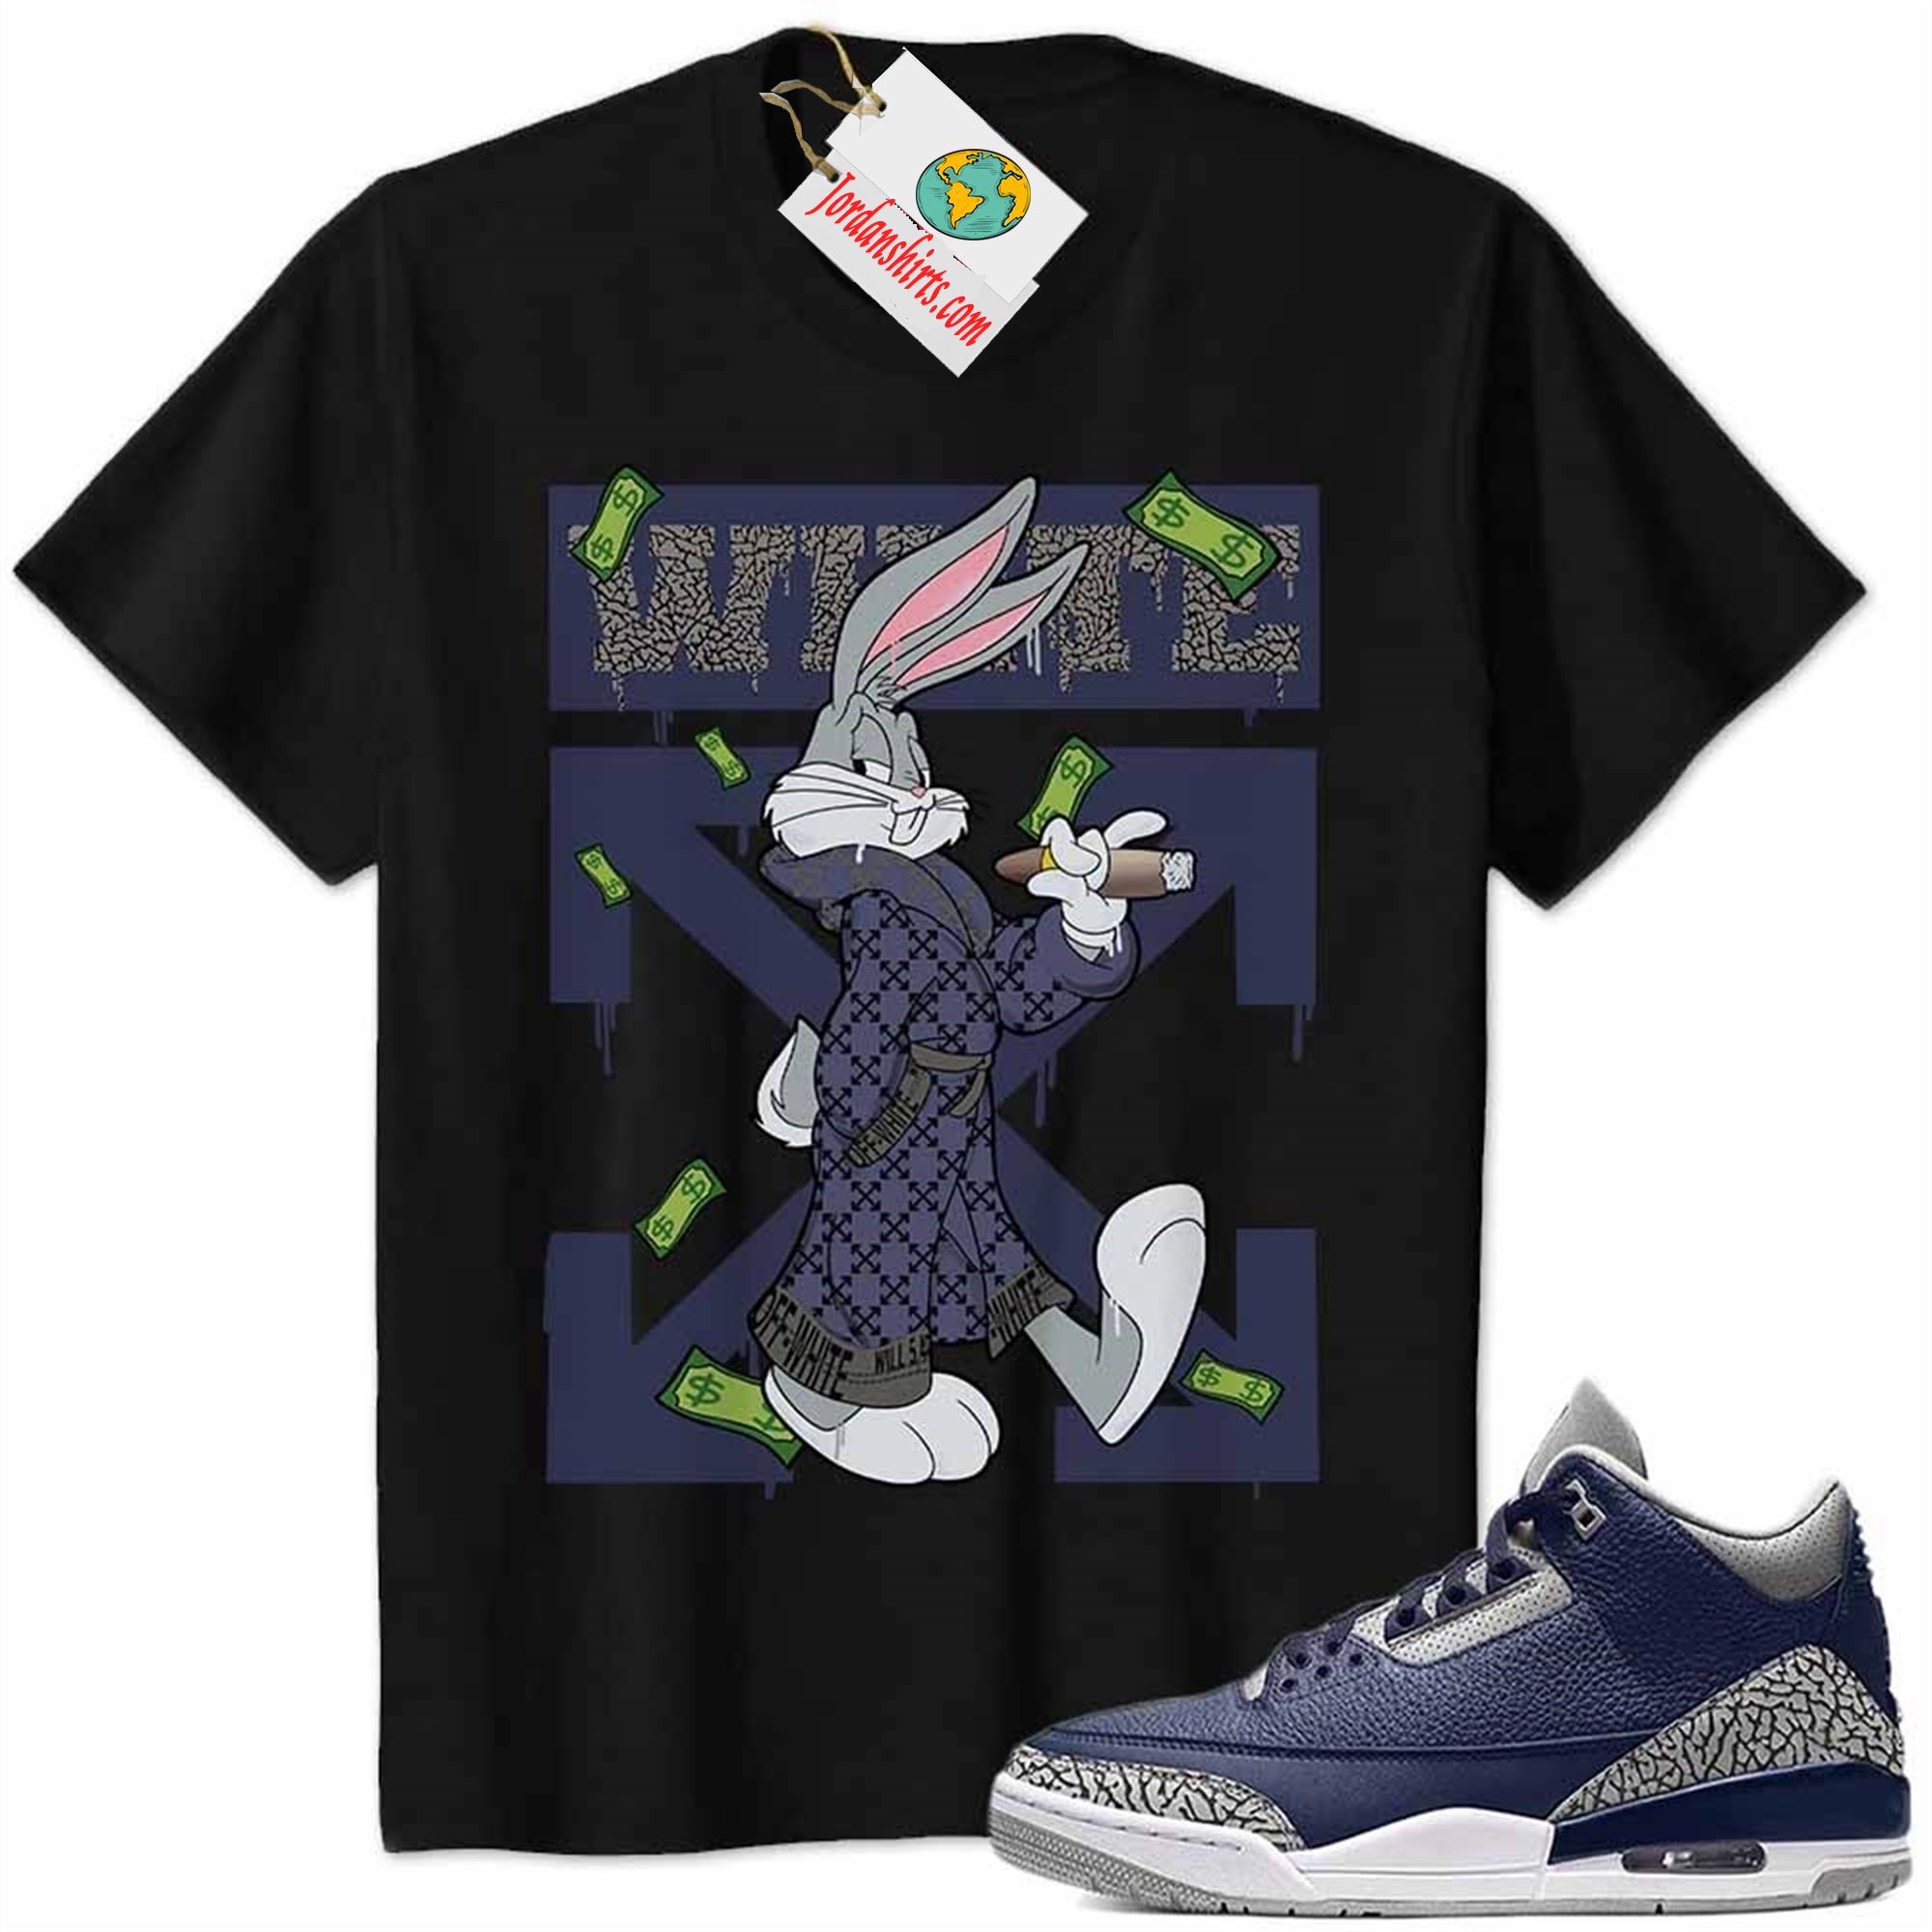 Jordan 3 Shirt, Jordan 3 Georgetown Midnight Navy Shirt Bug Bunny Smokes Weed Money Falling Black Full Size Up To 5xl